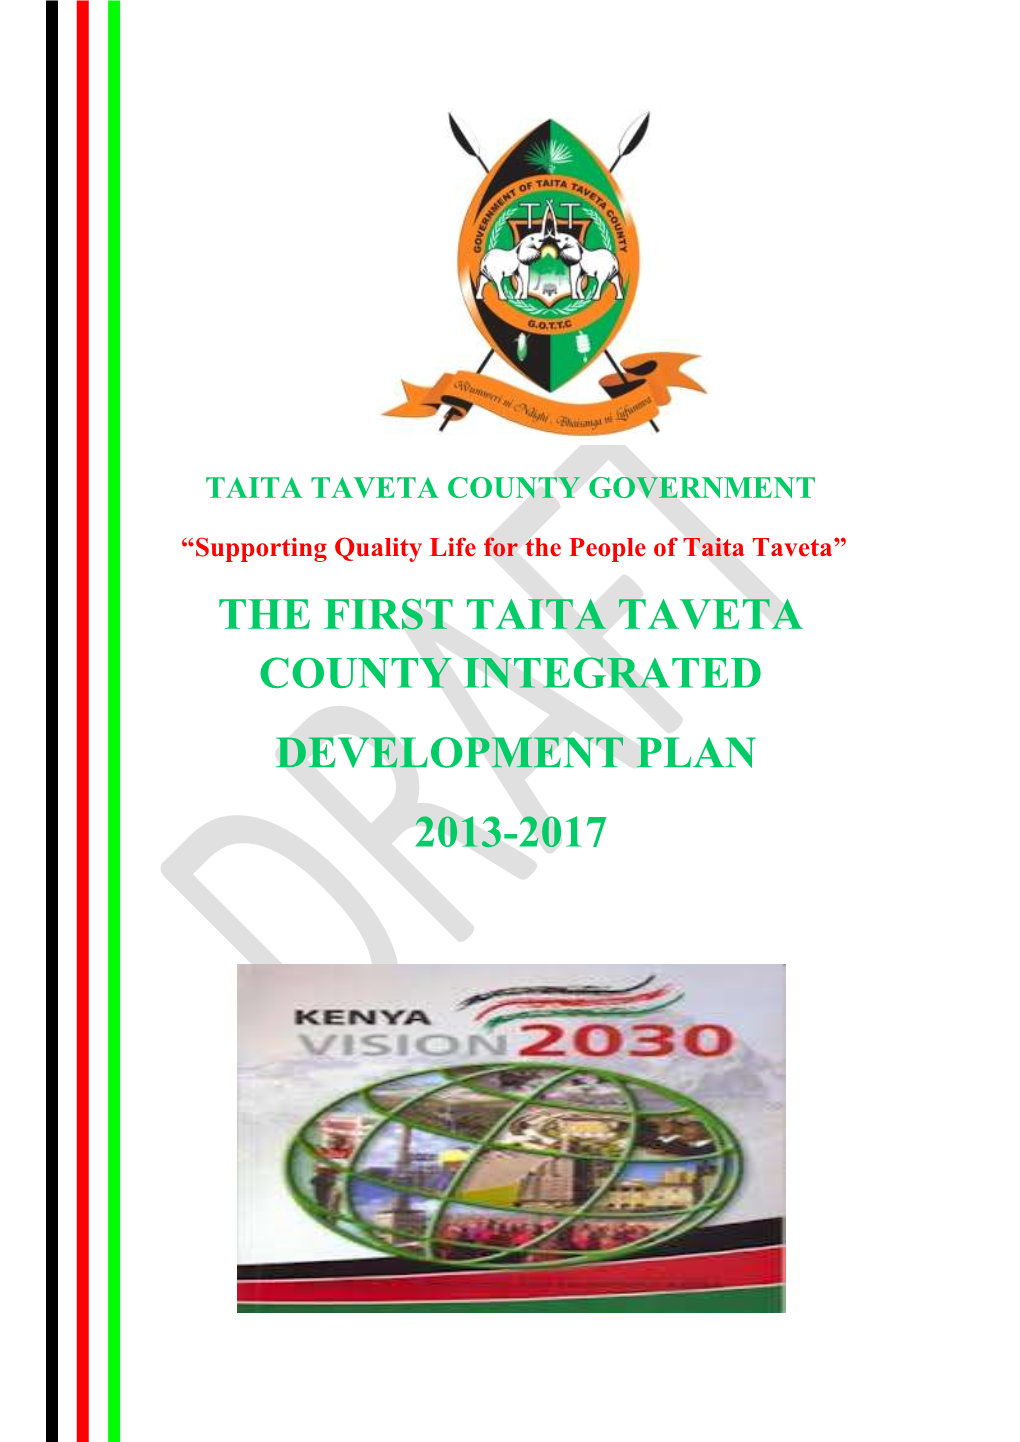 The First Taita Taveta County Integrated Development Plan 2013-2017